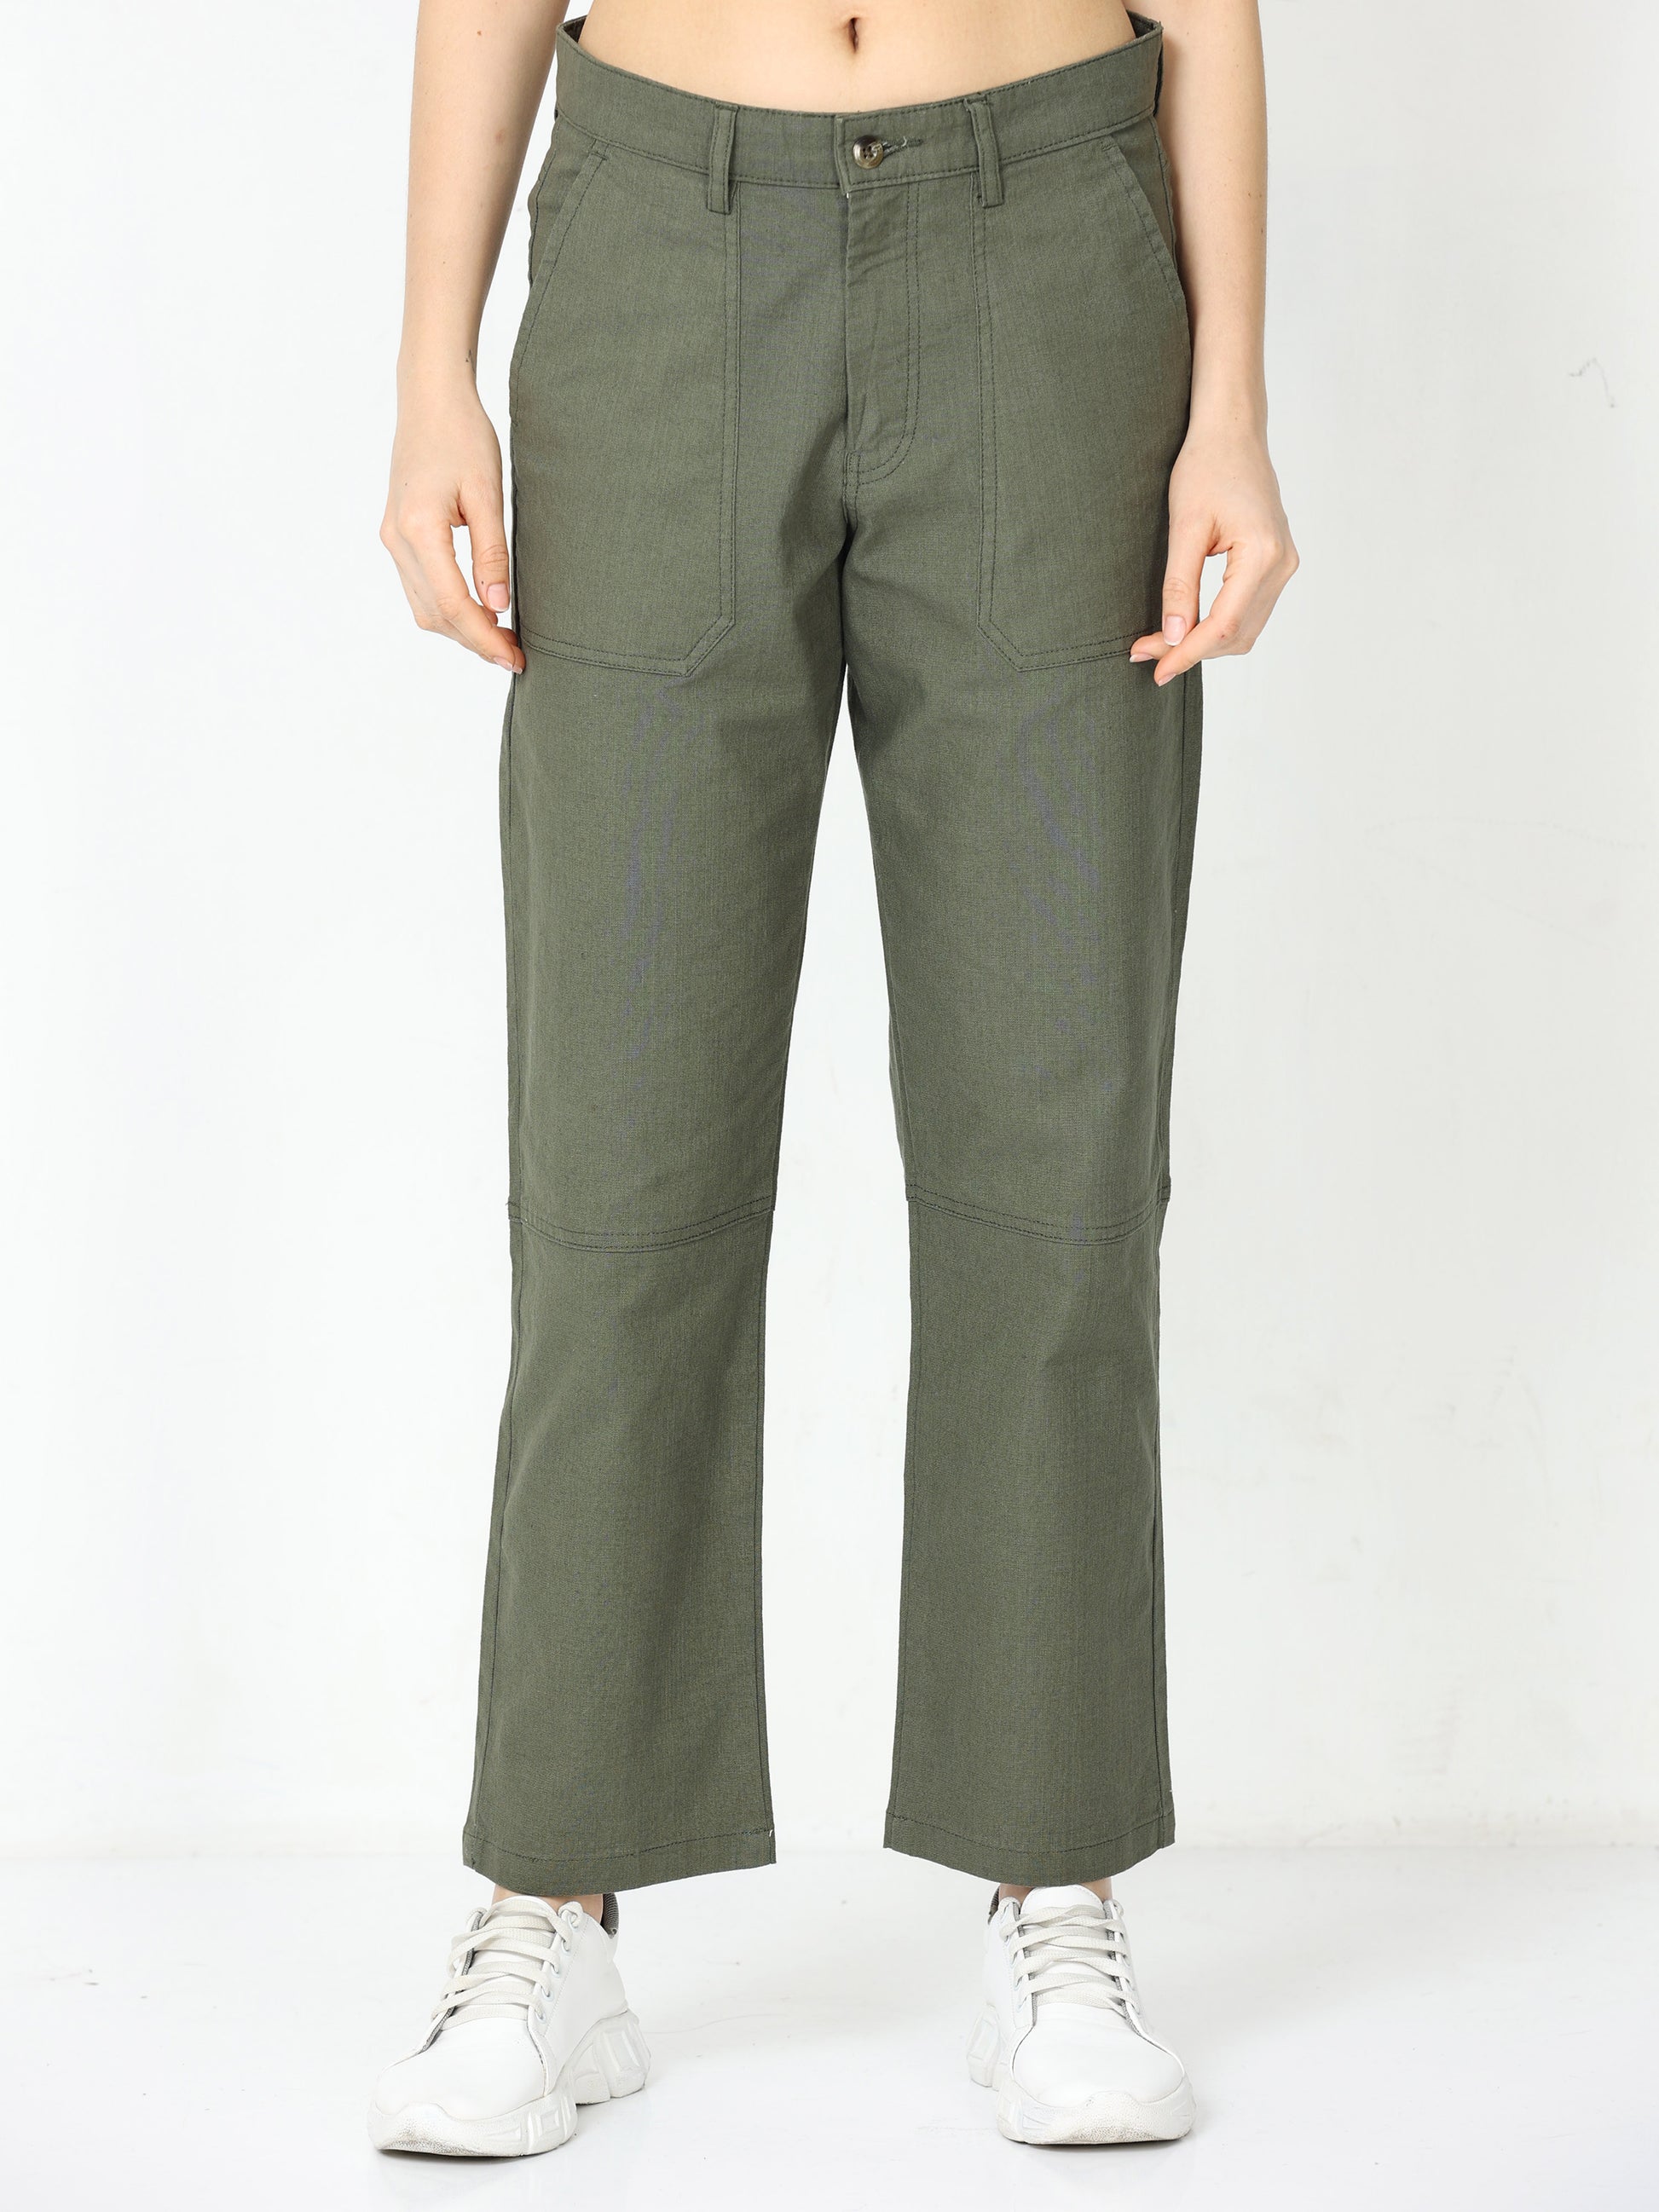 Women Casual Olive Linen Pants